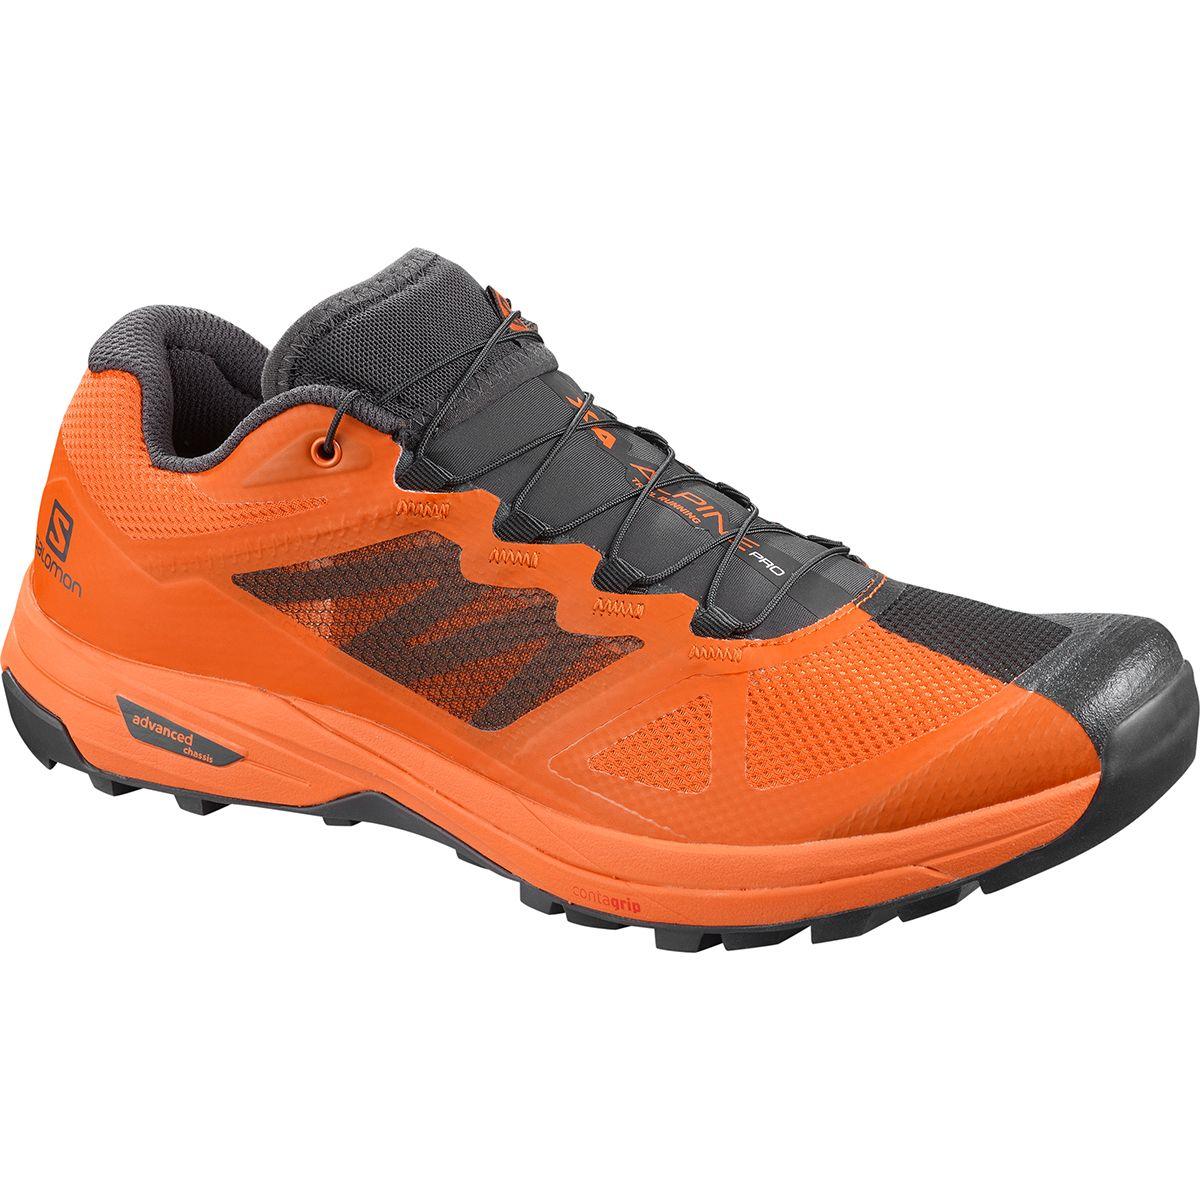 Salomon Rubber X Alpine Pro Trail Running Shoe in Orange for Men - Lyst